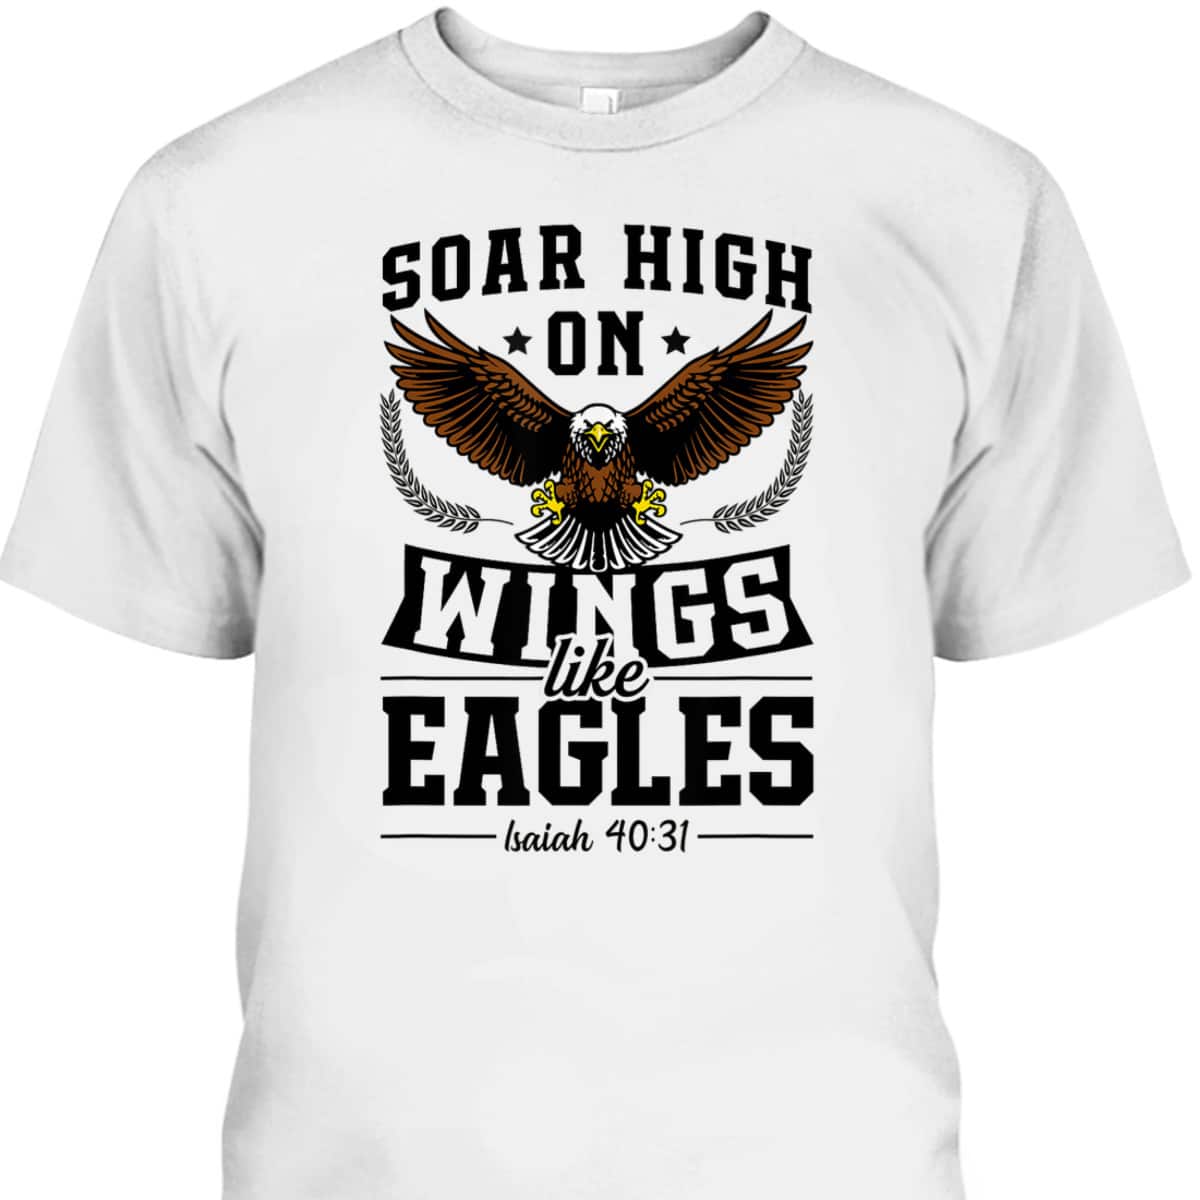 Soar High On Wings Like Eagles Patriotic Christian Bible Verse T-Shirt